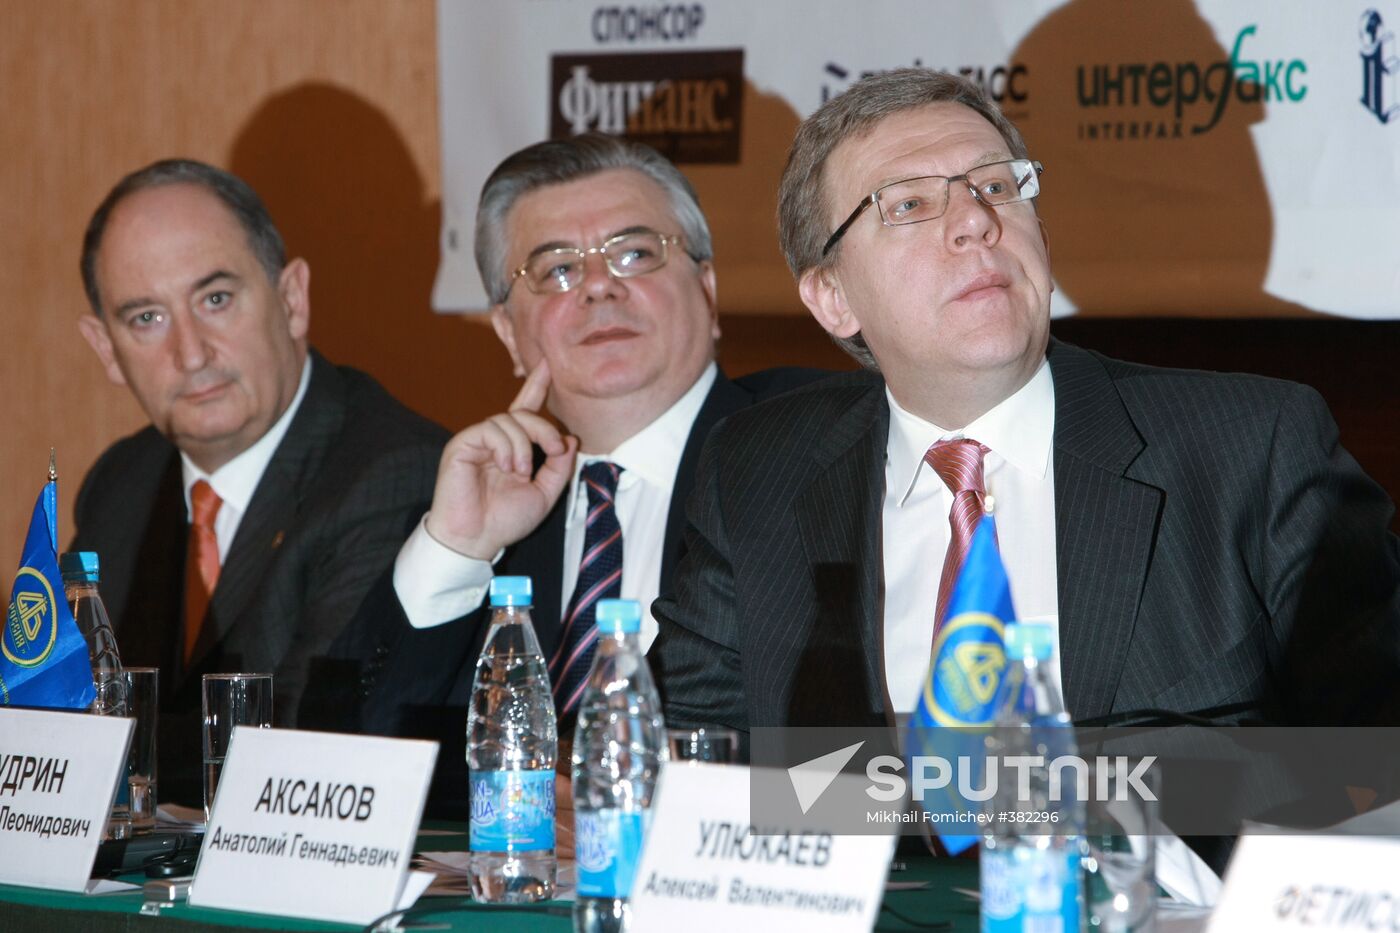 Alexei Kudrin, Alexander Murychev, Stuart Lawson